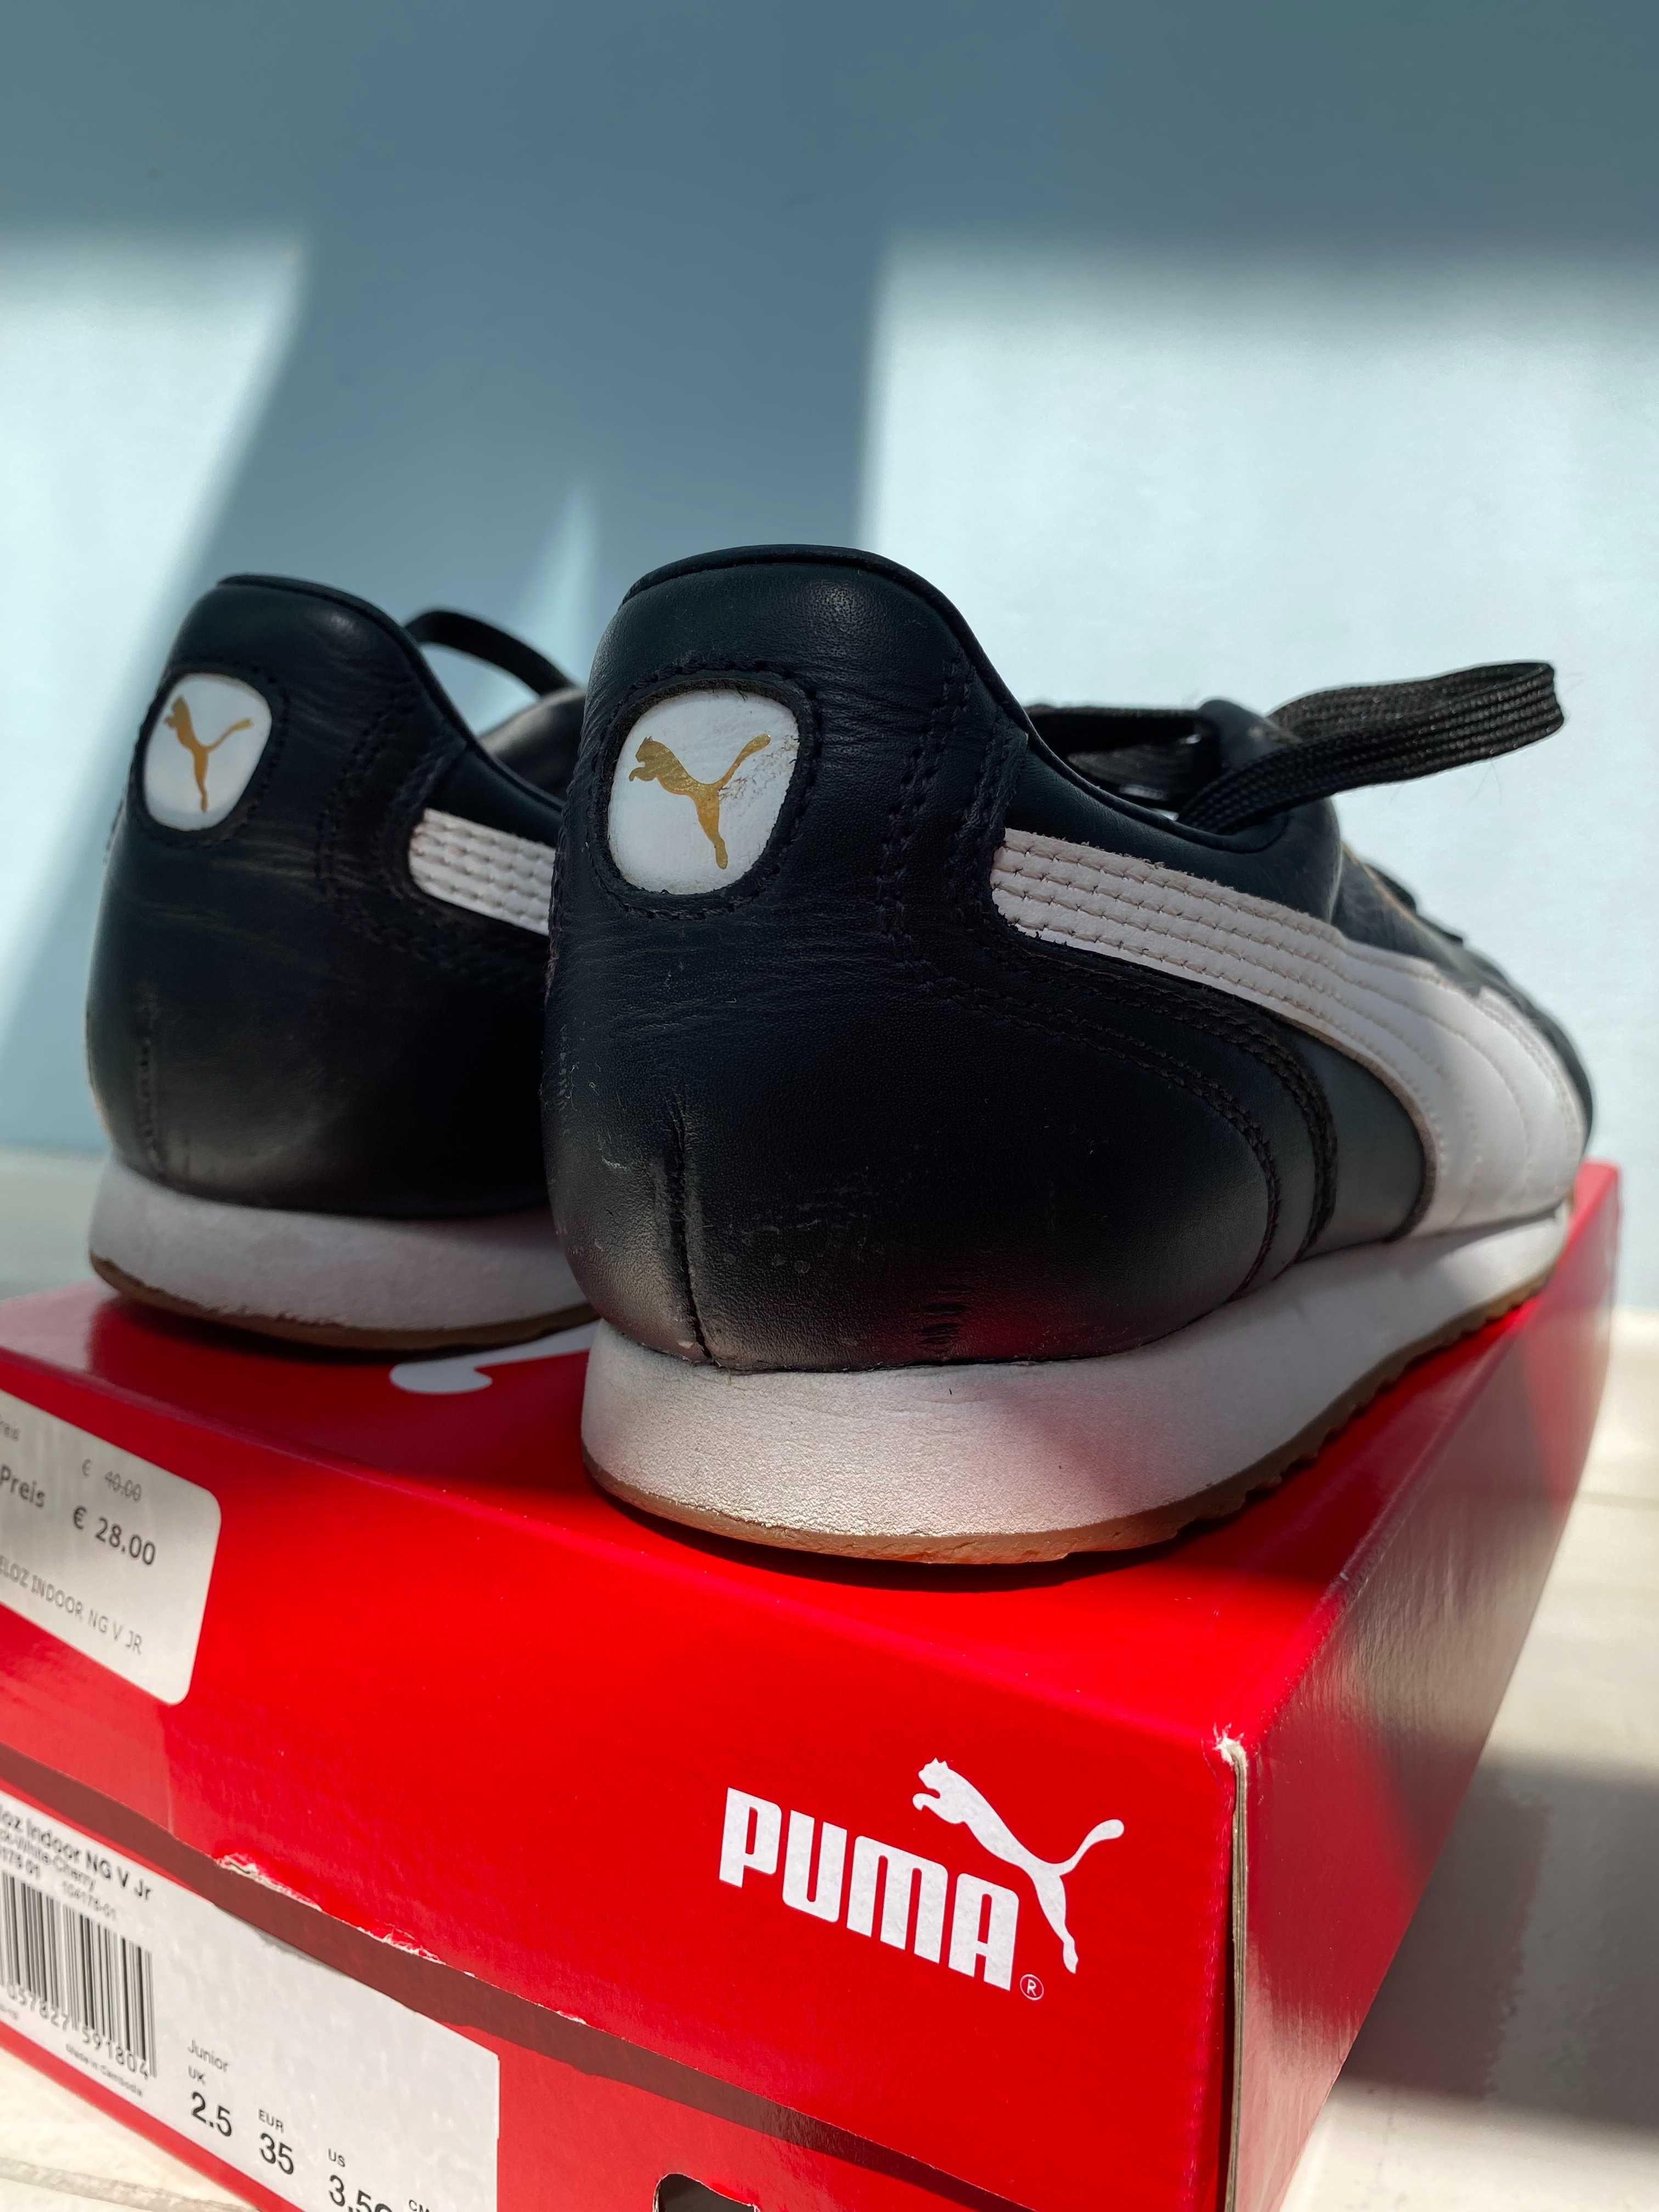 Adidasi Puma sport din piele.